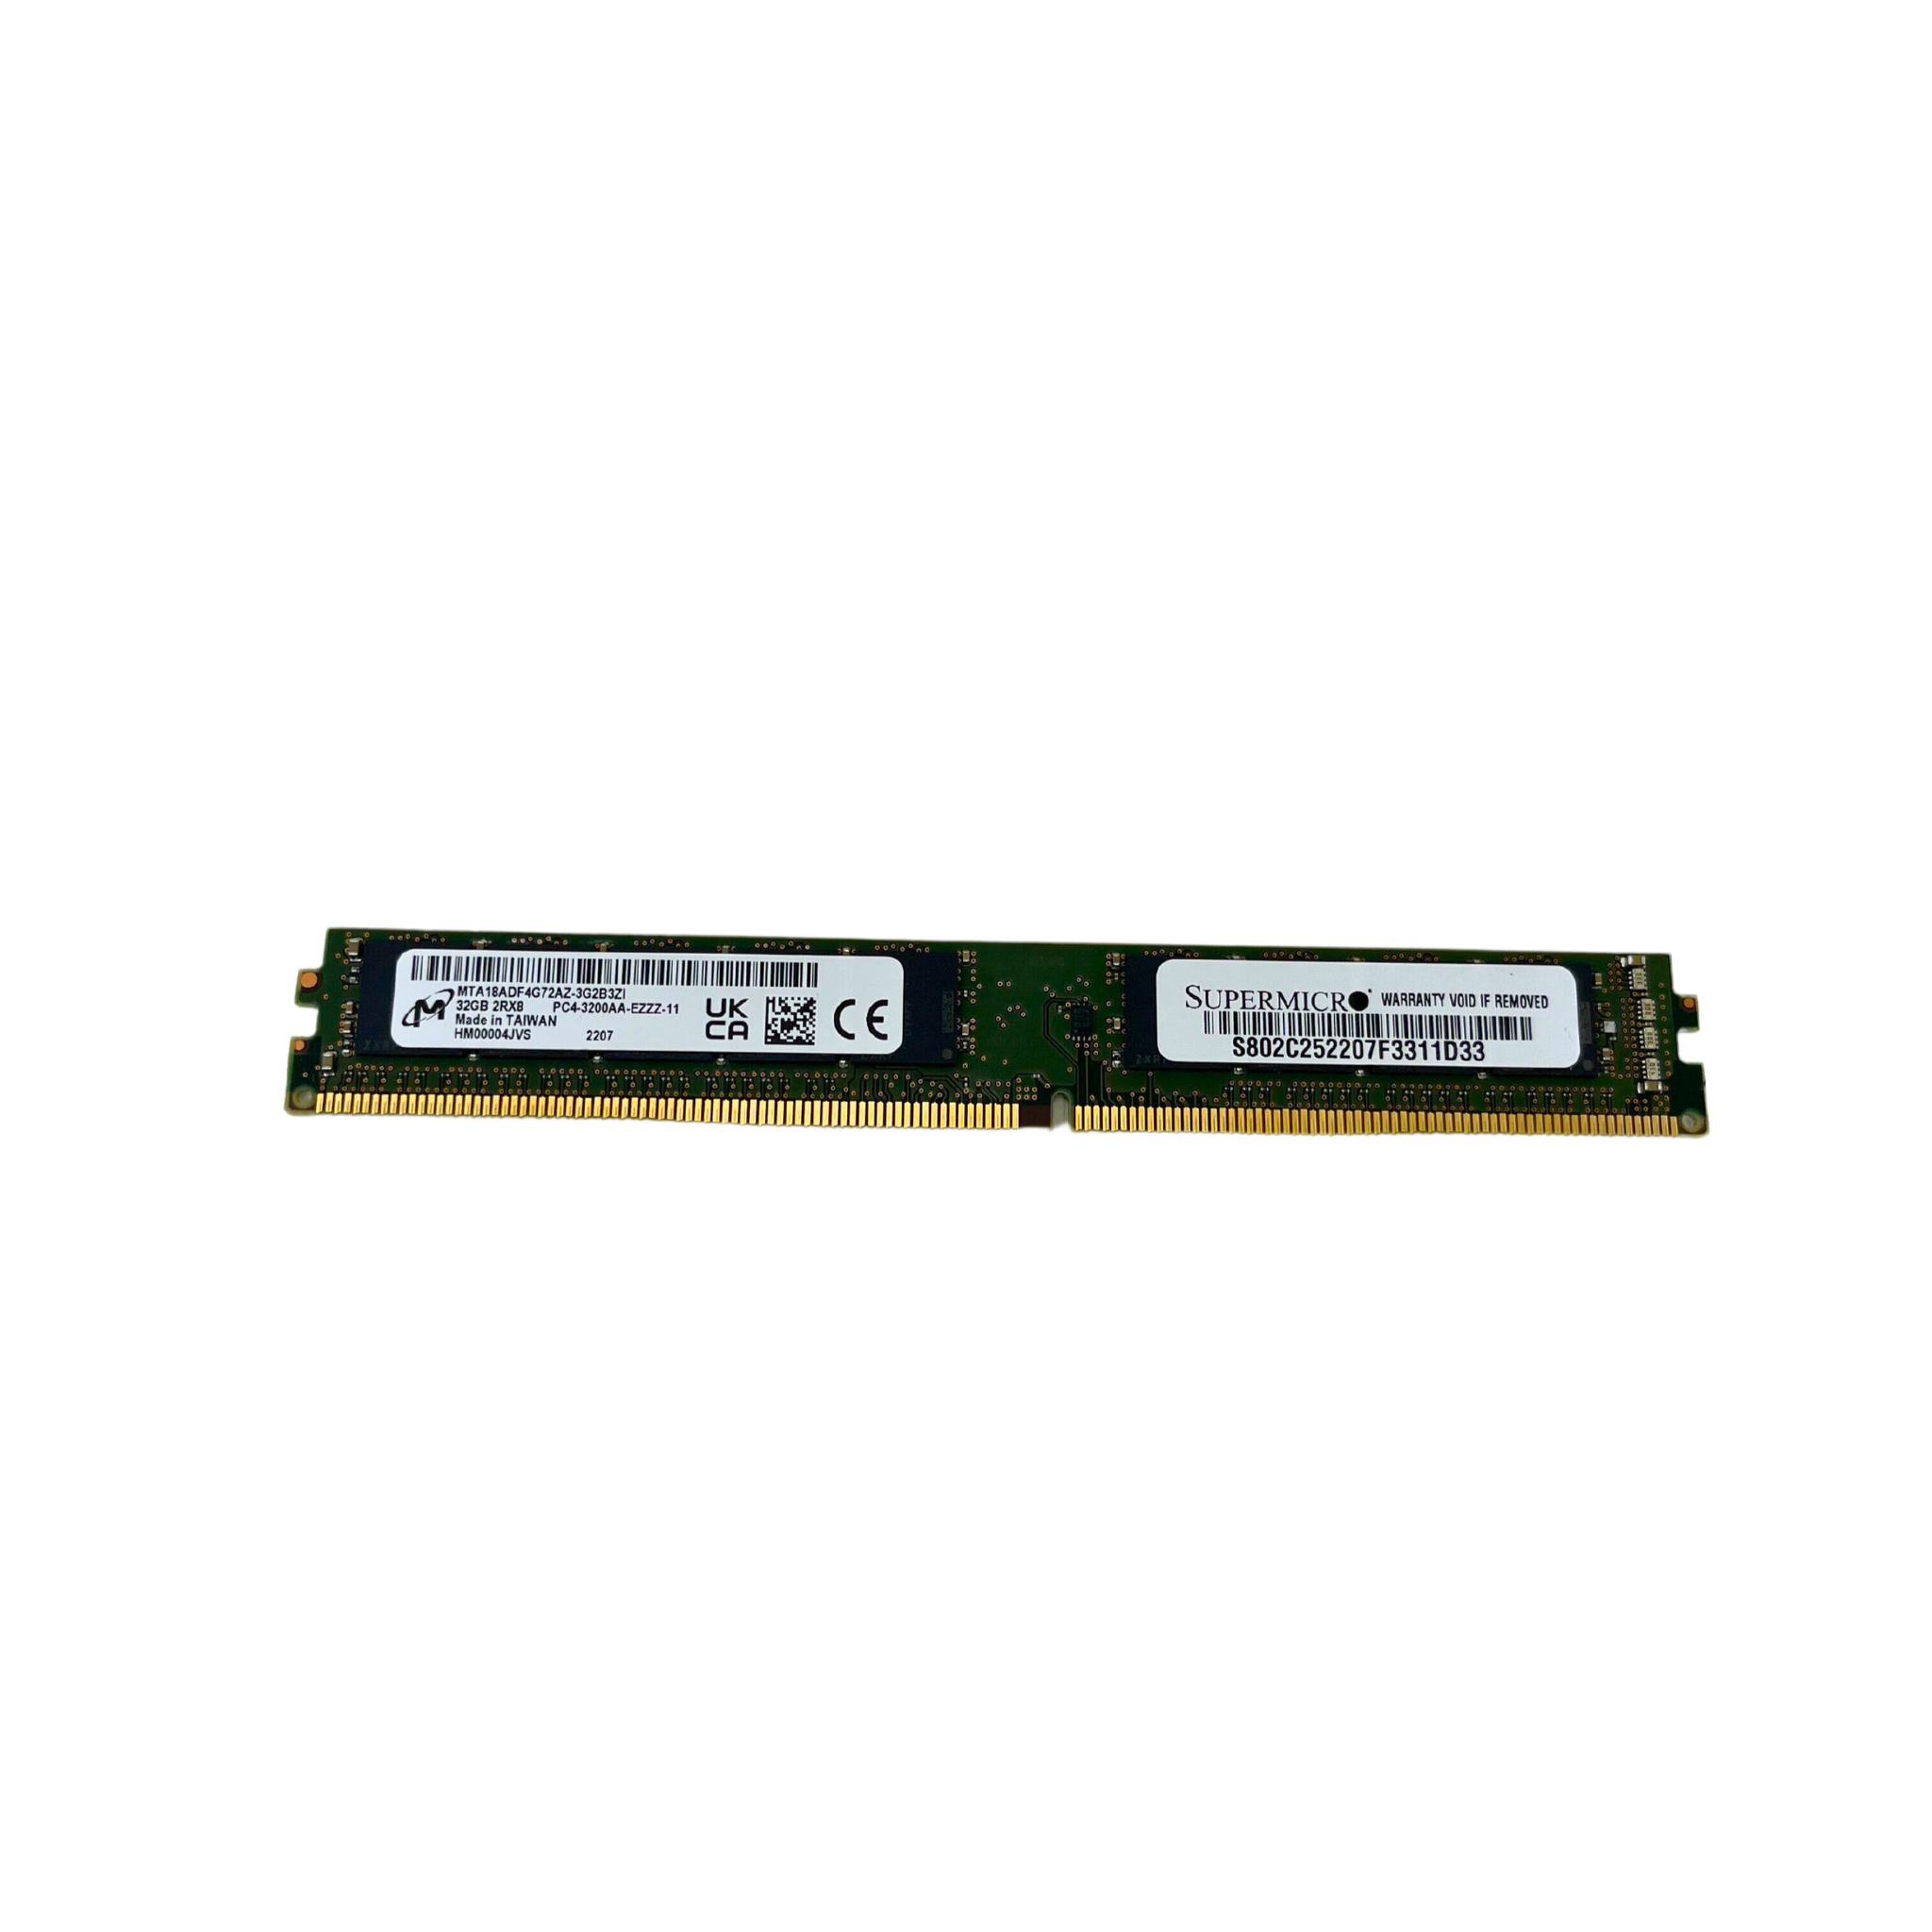 Micron 32GB 2RX8 PC4-3200AA DDR4 ECC UDIMM VLP Memory (M391A4G43AB1-CWEQ0-3rdParty)